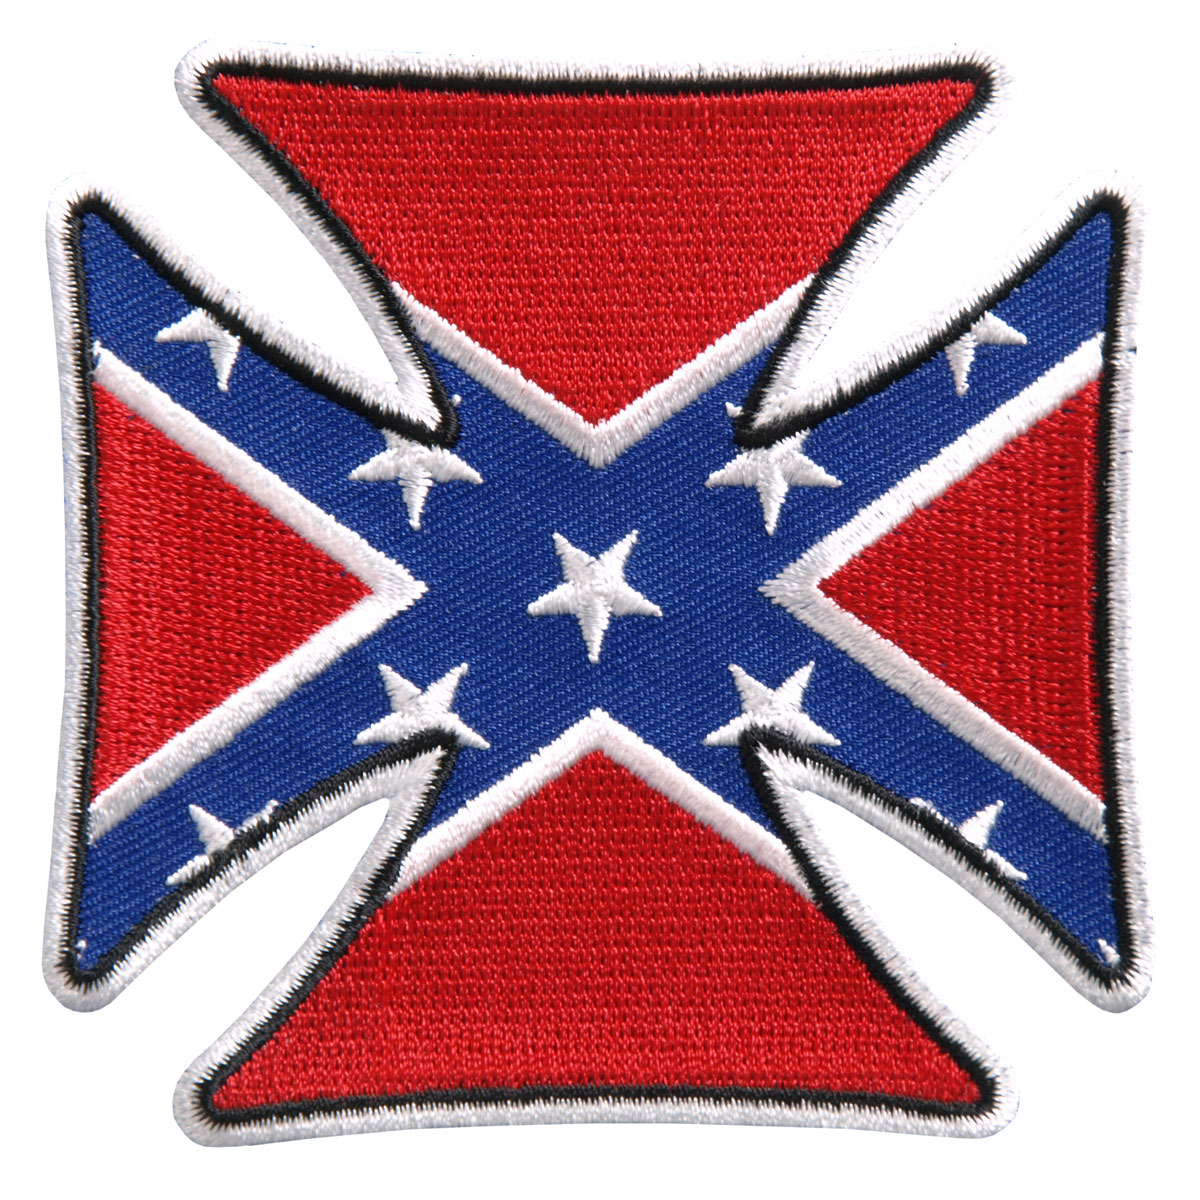 Confederate Flag Decal